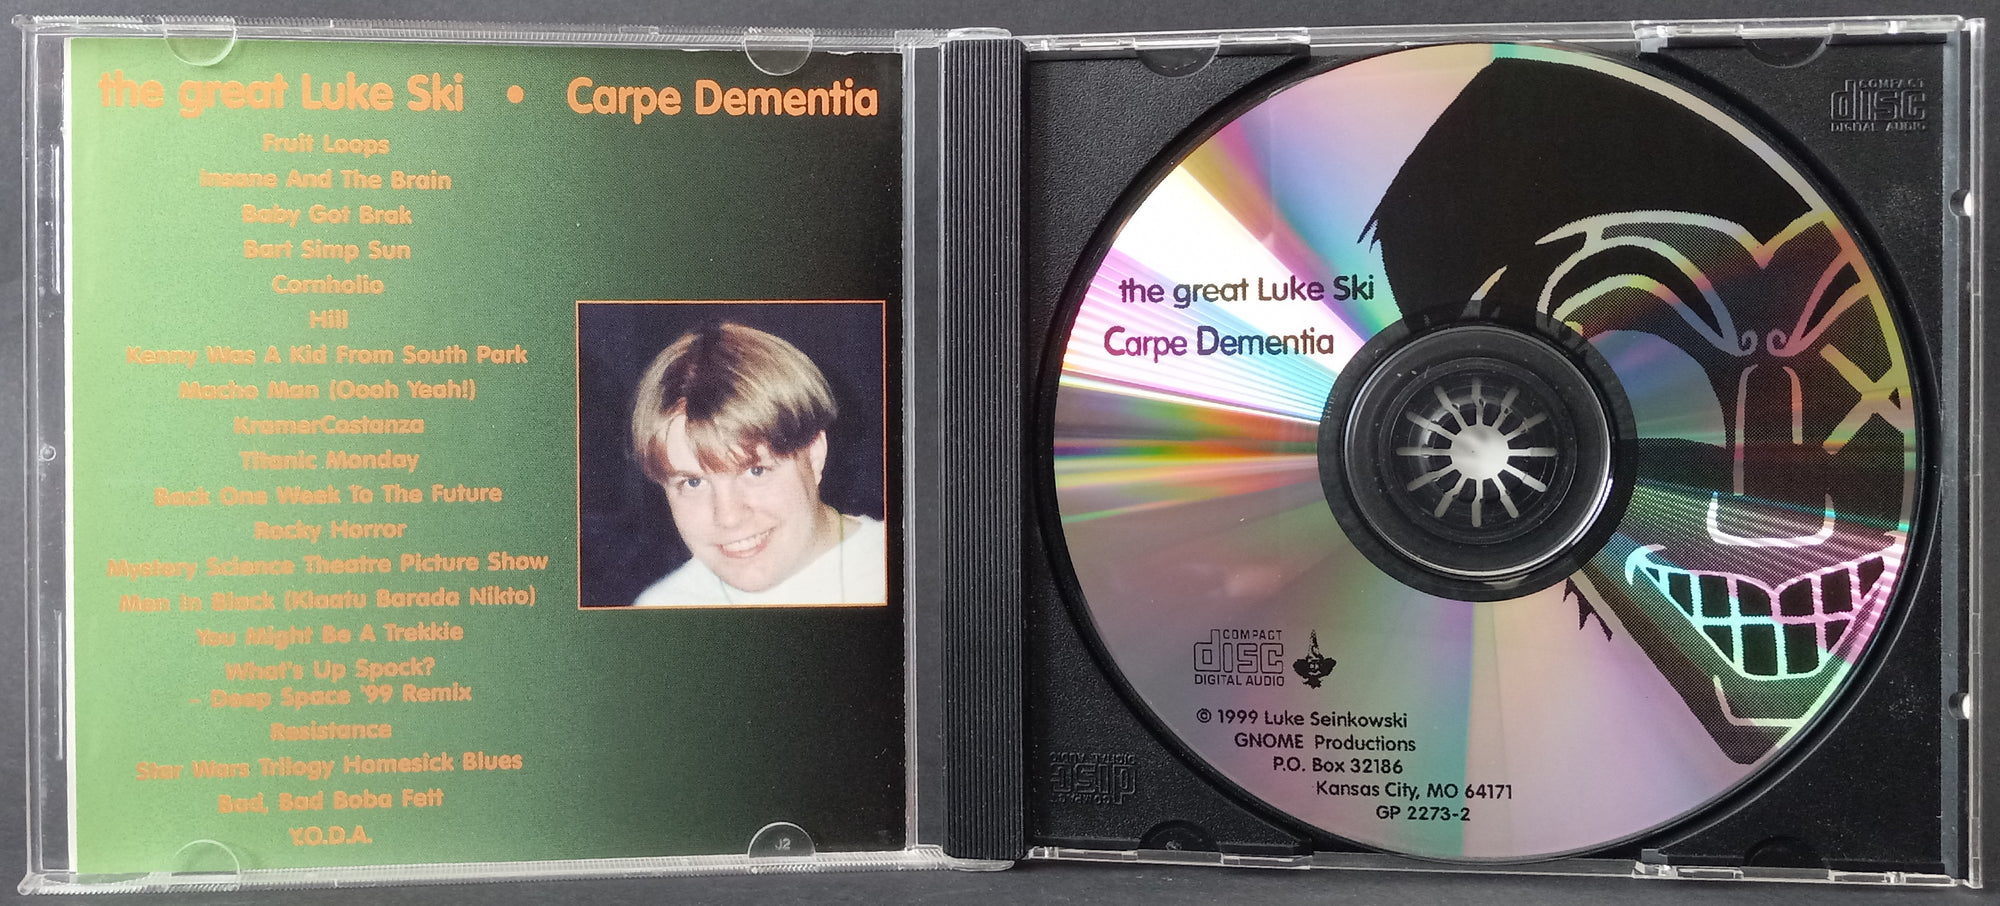 Luke-Ski-Carpe-Dementia-CD